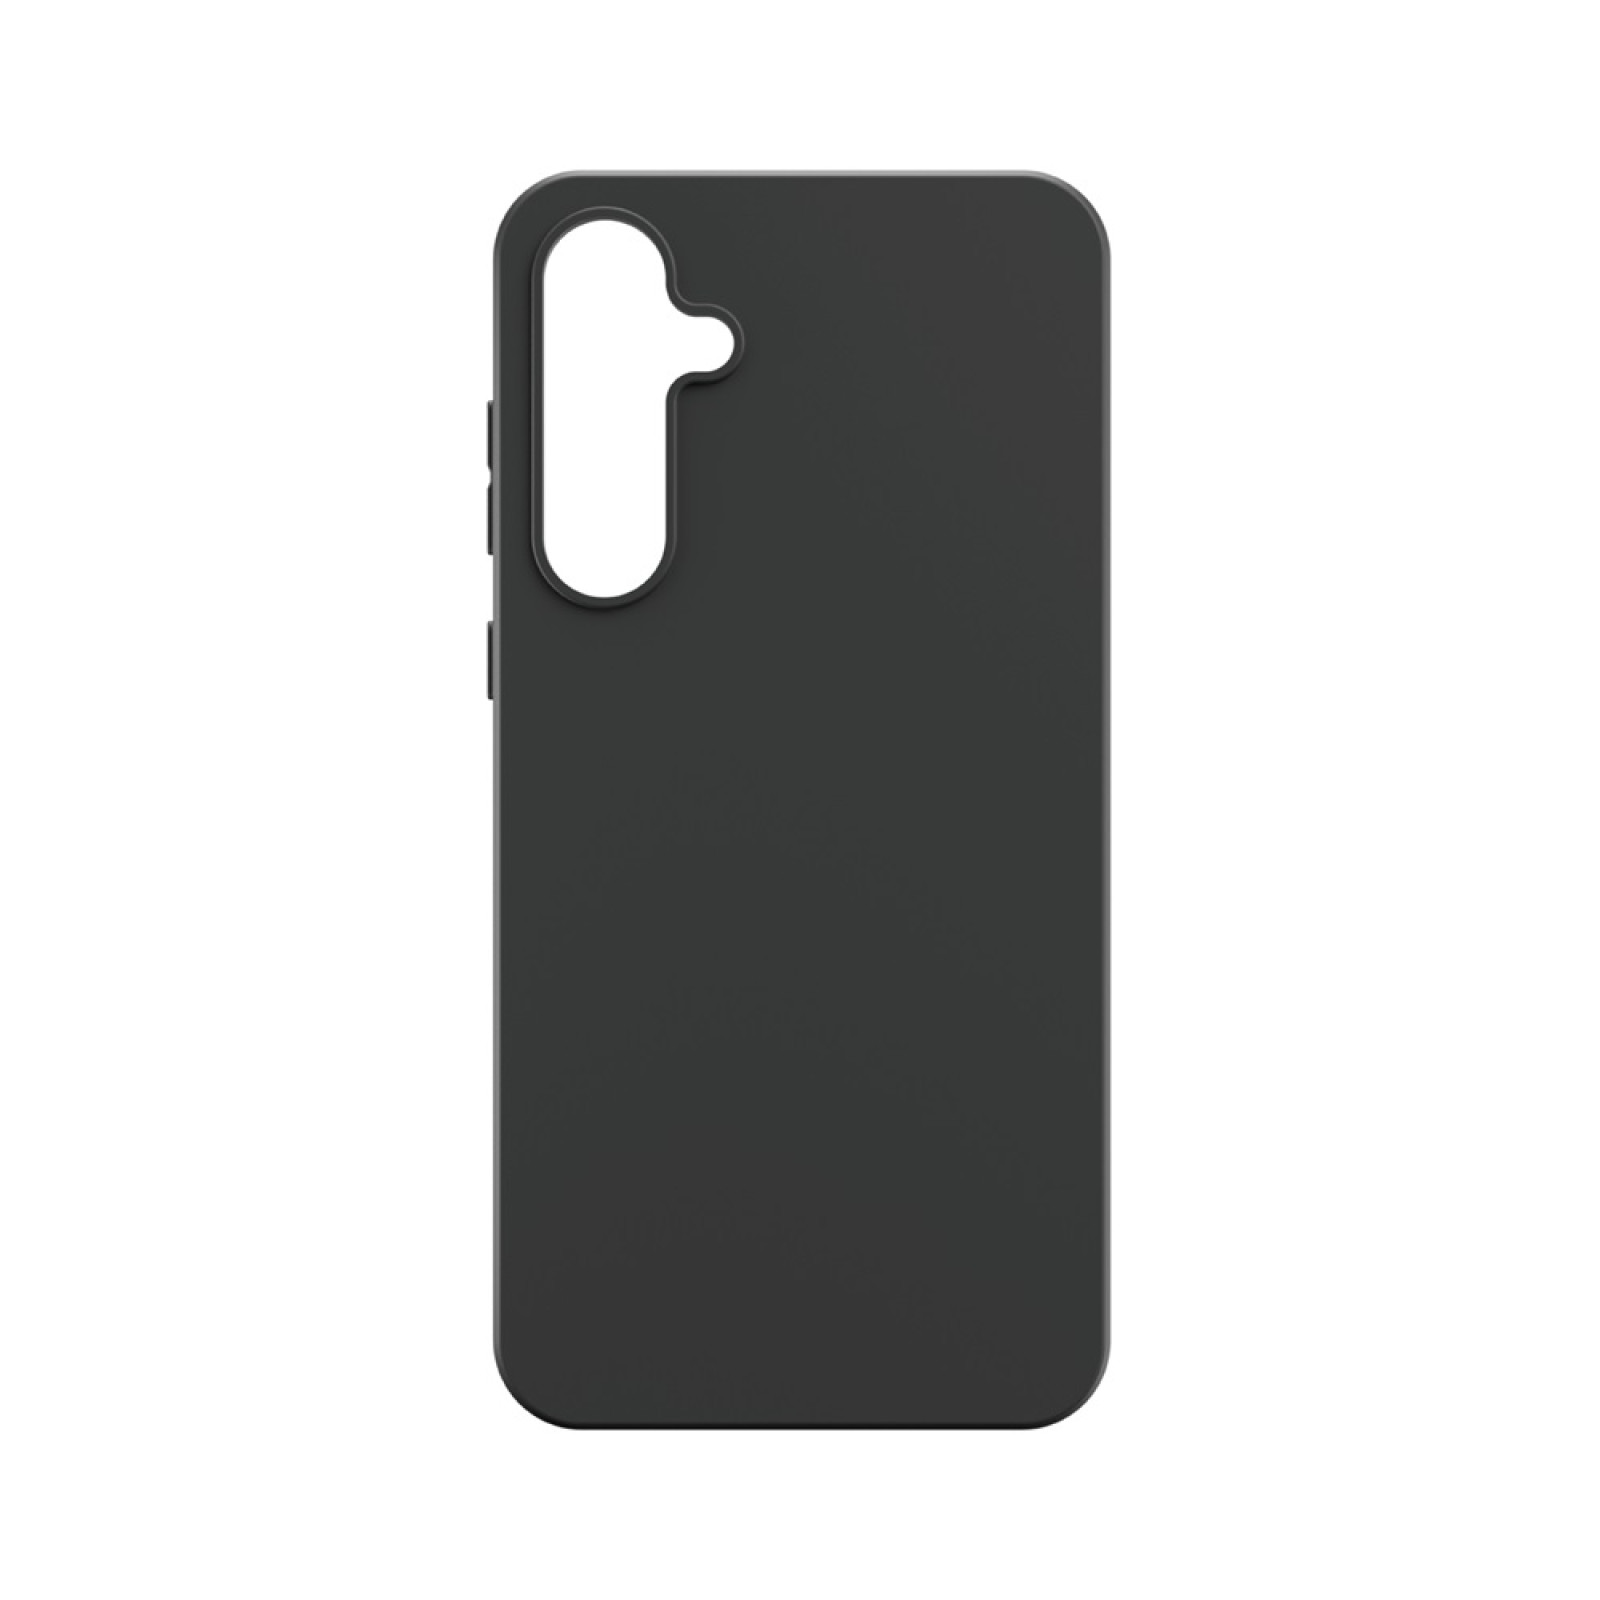 Гръб Safe за Samsung Galaxy A55 5 G, TPU, Черен